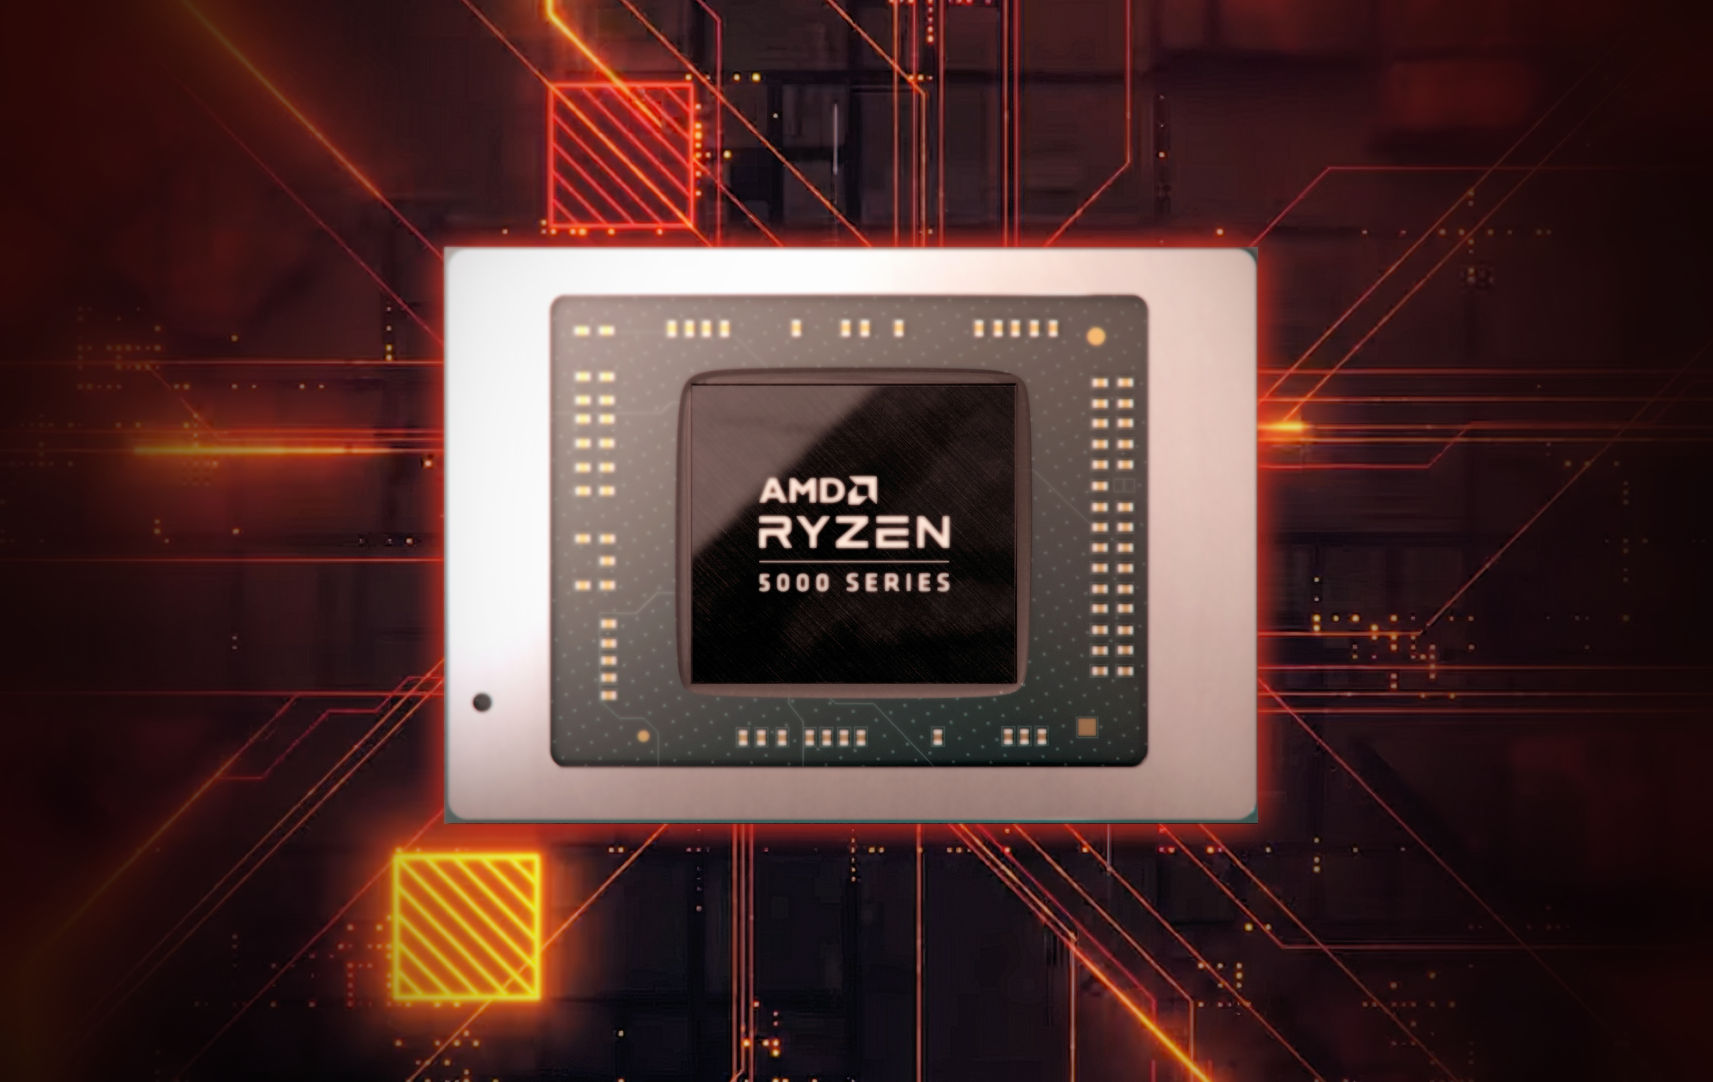 AMD Ryzen 9 5900HX is now PassMark's highest ranking mobile CPU